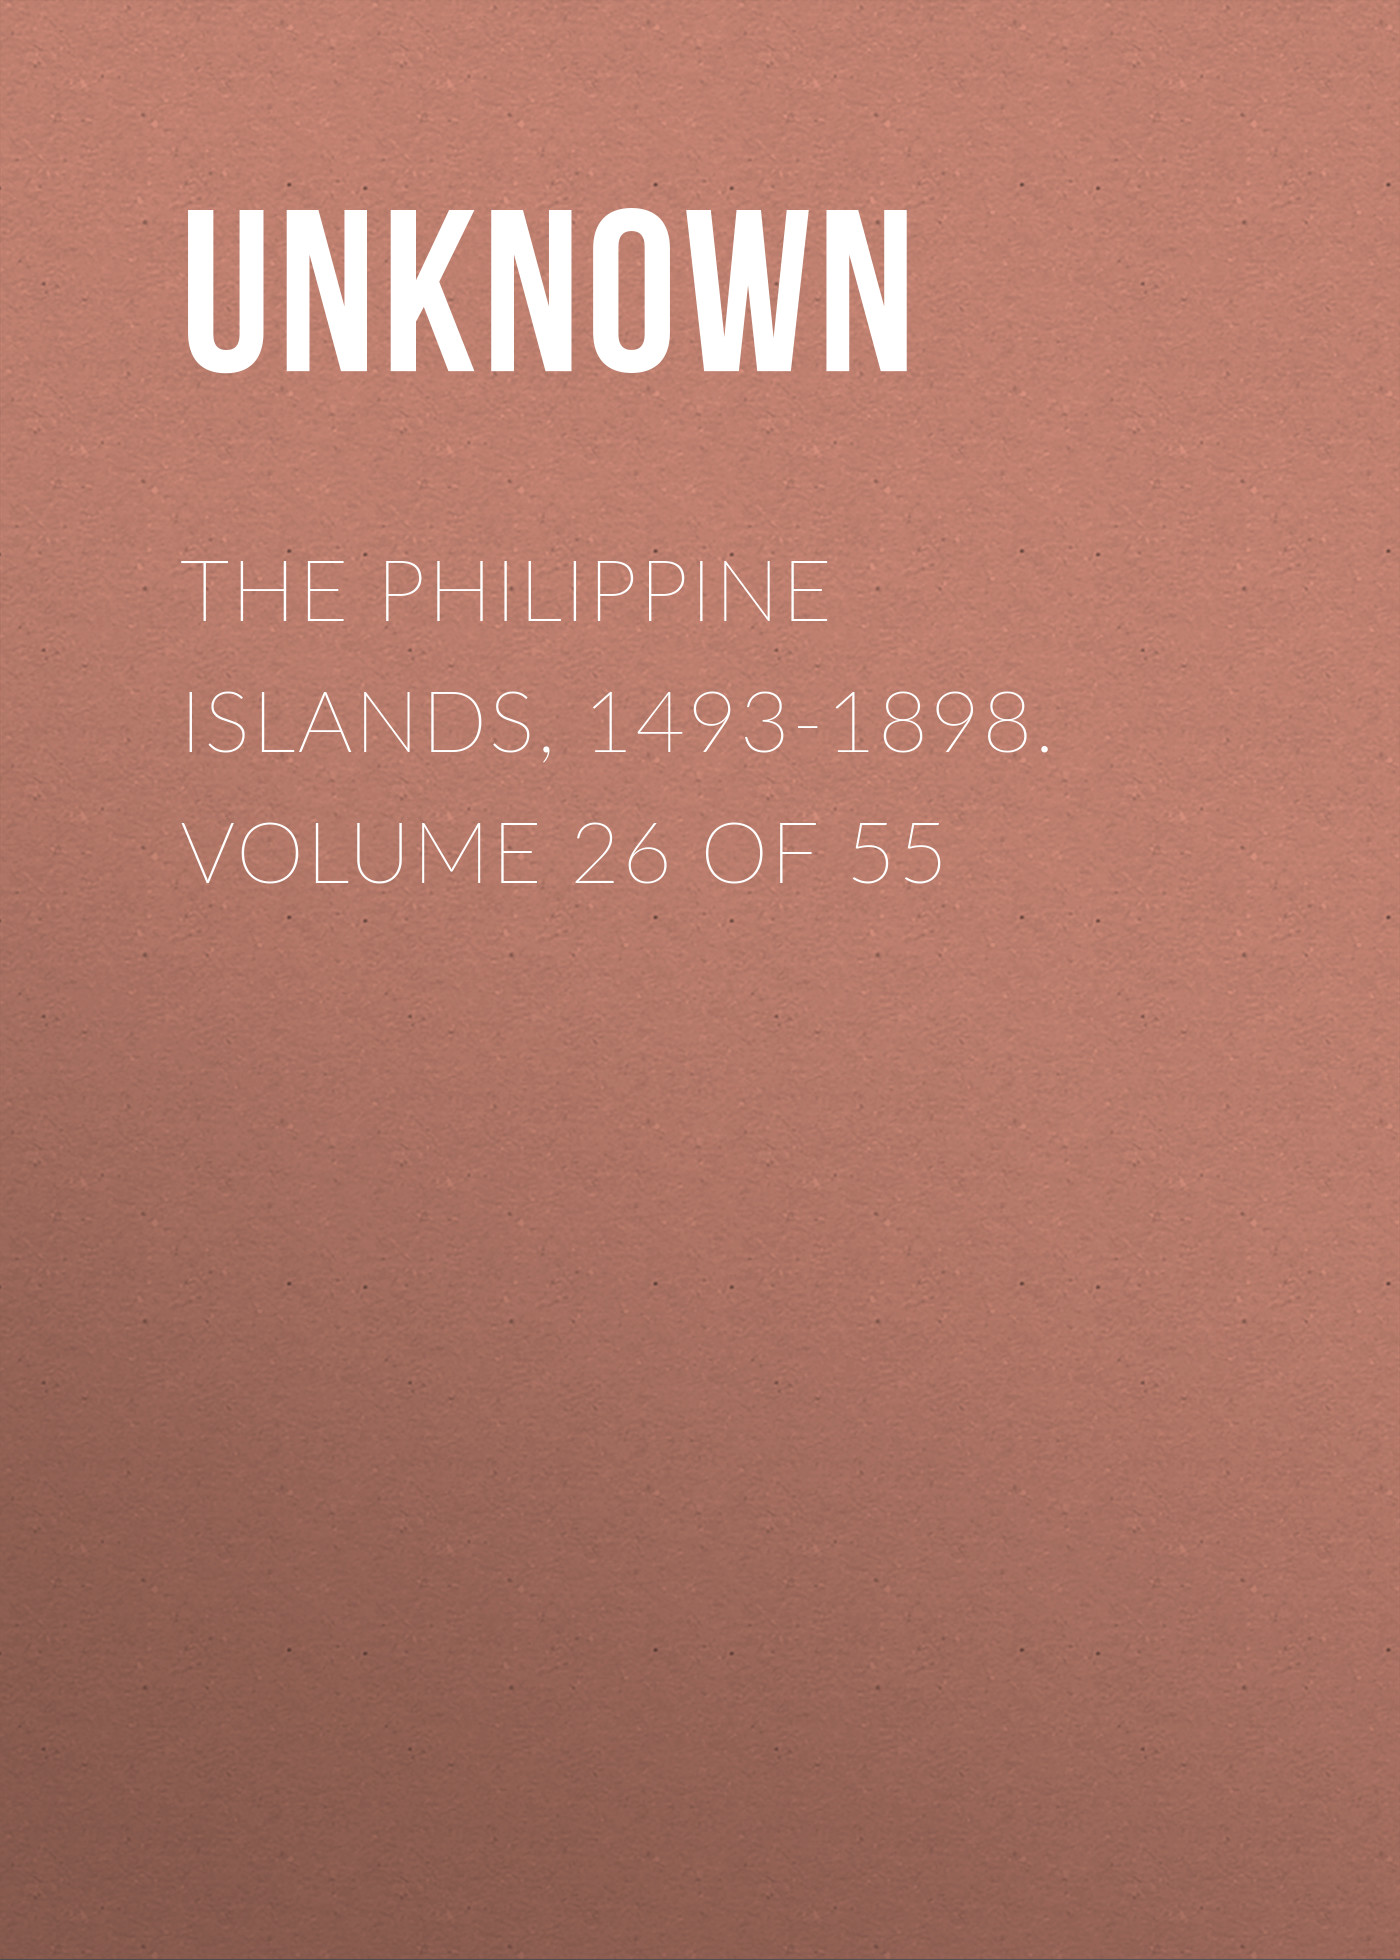 The Philippine Islands, 1493-1898. Volume 26 of 55